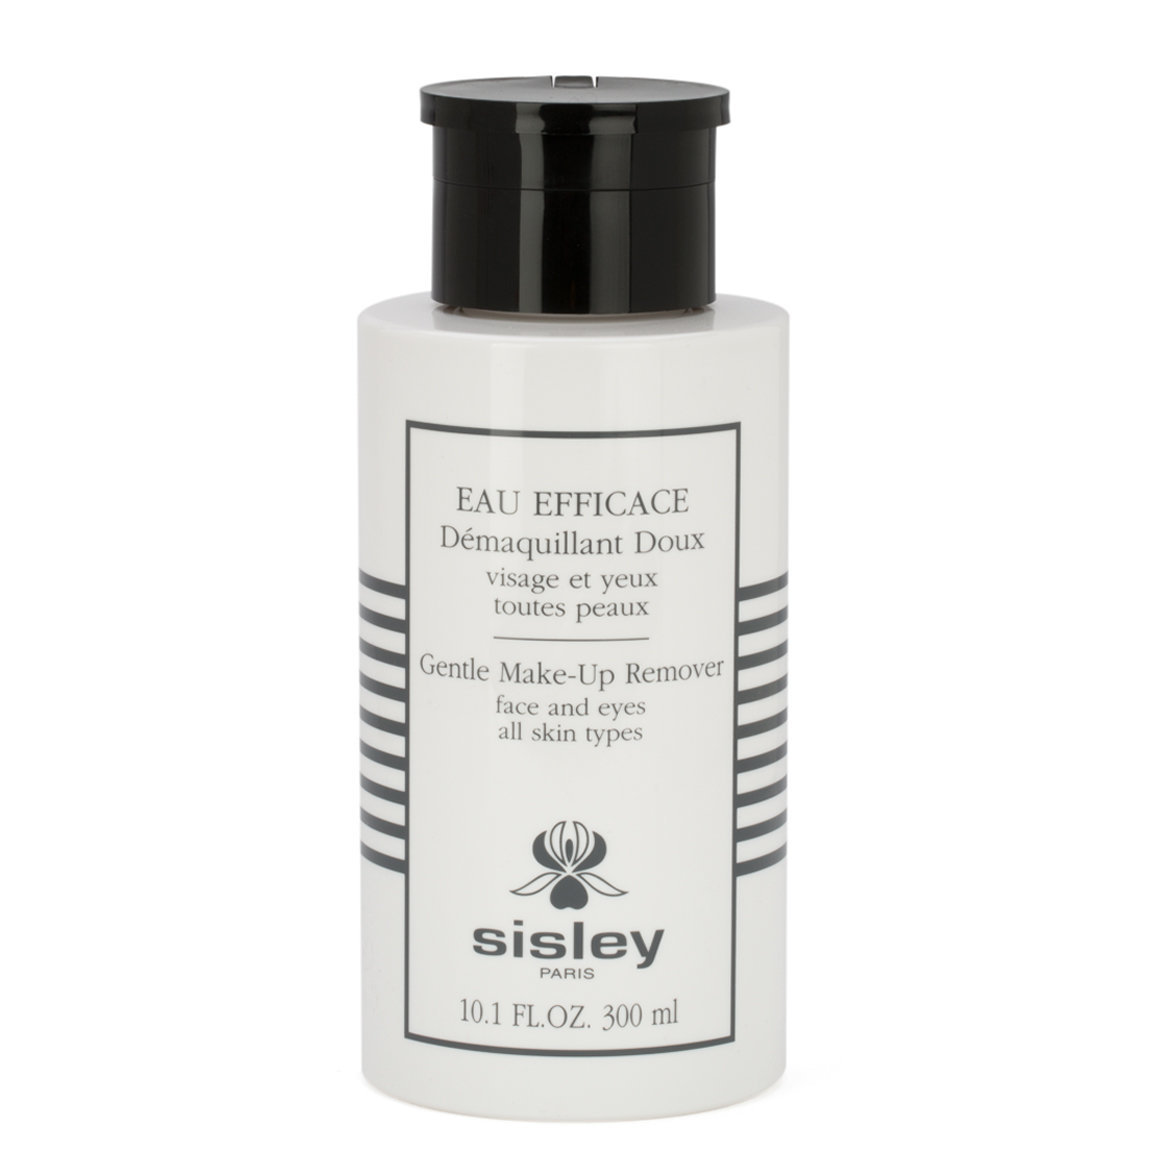 Sisley-Paris Eau Efficace Gentle Make-Up Remover alternative view 1 - product swatch.